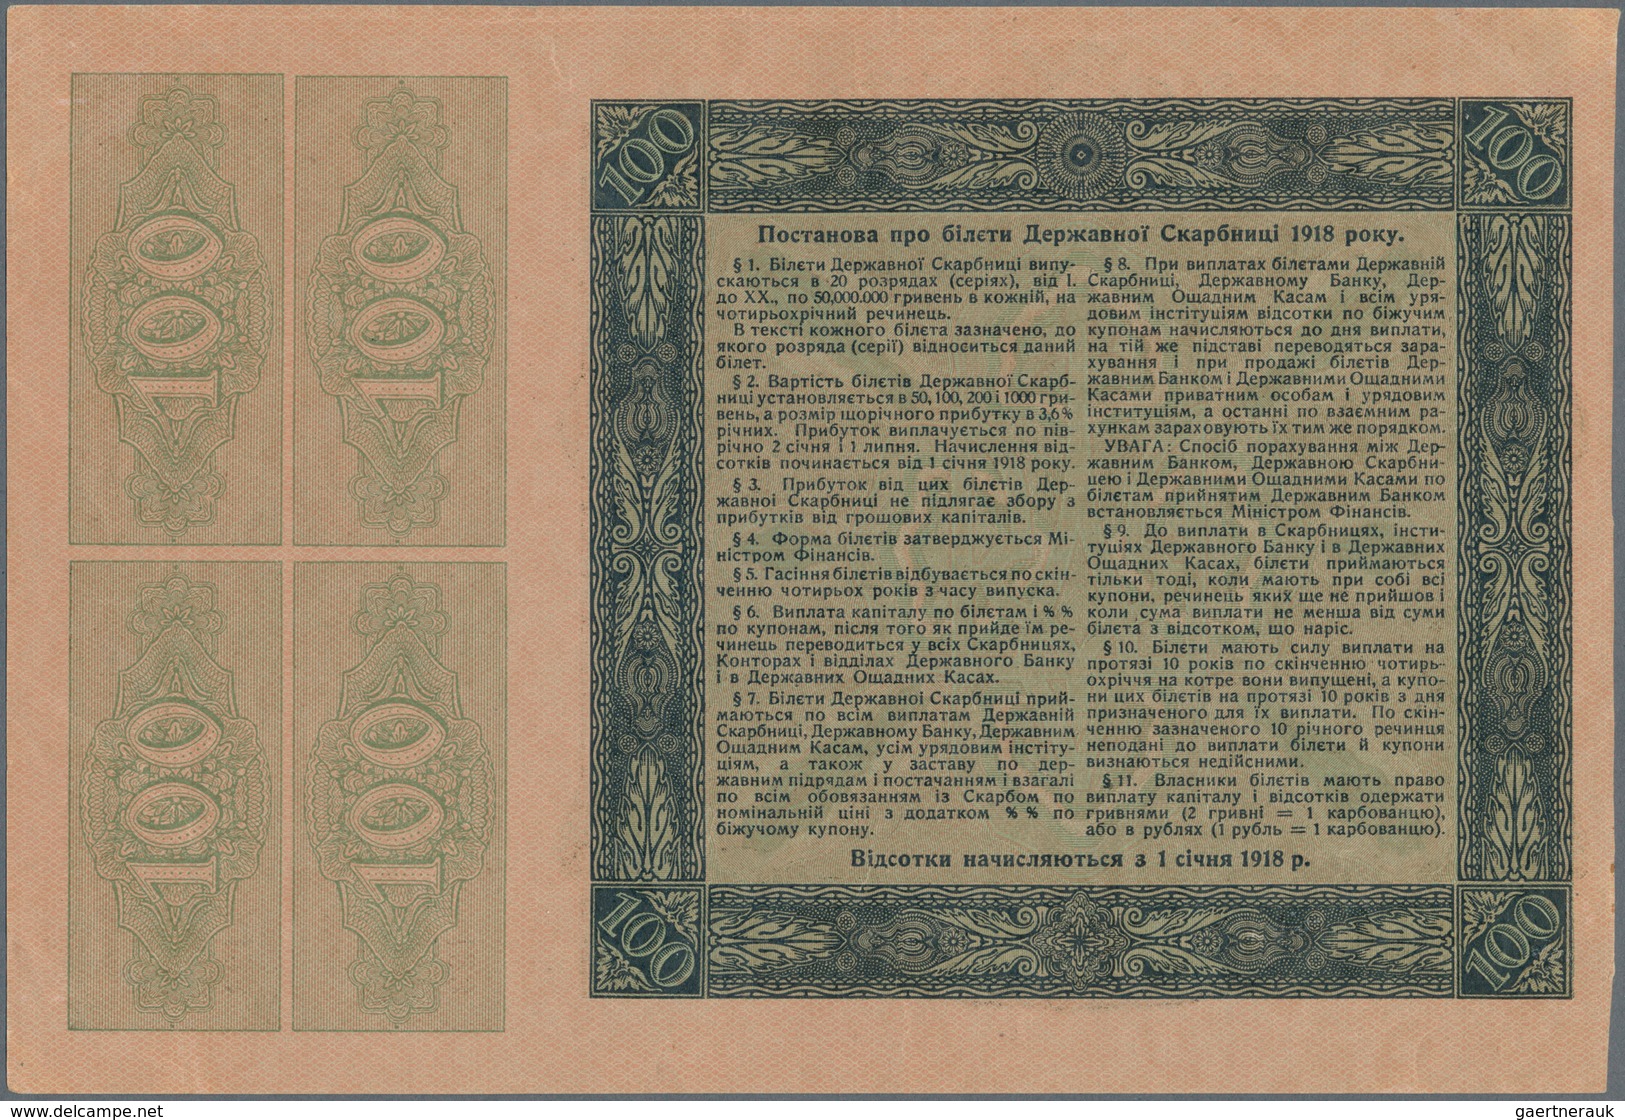 Ukraina / Ukraine: 100 Hriven 1918 "3.6% Bond" Certificates Issue, P.13 With 4 Cupons Of 1 Hriven 80 - Ukraine